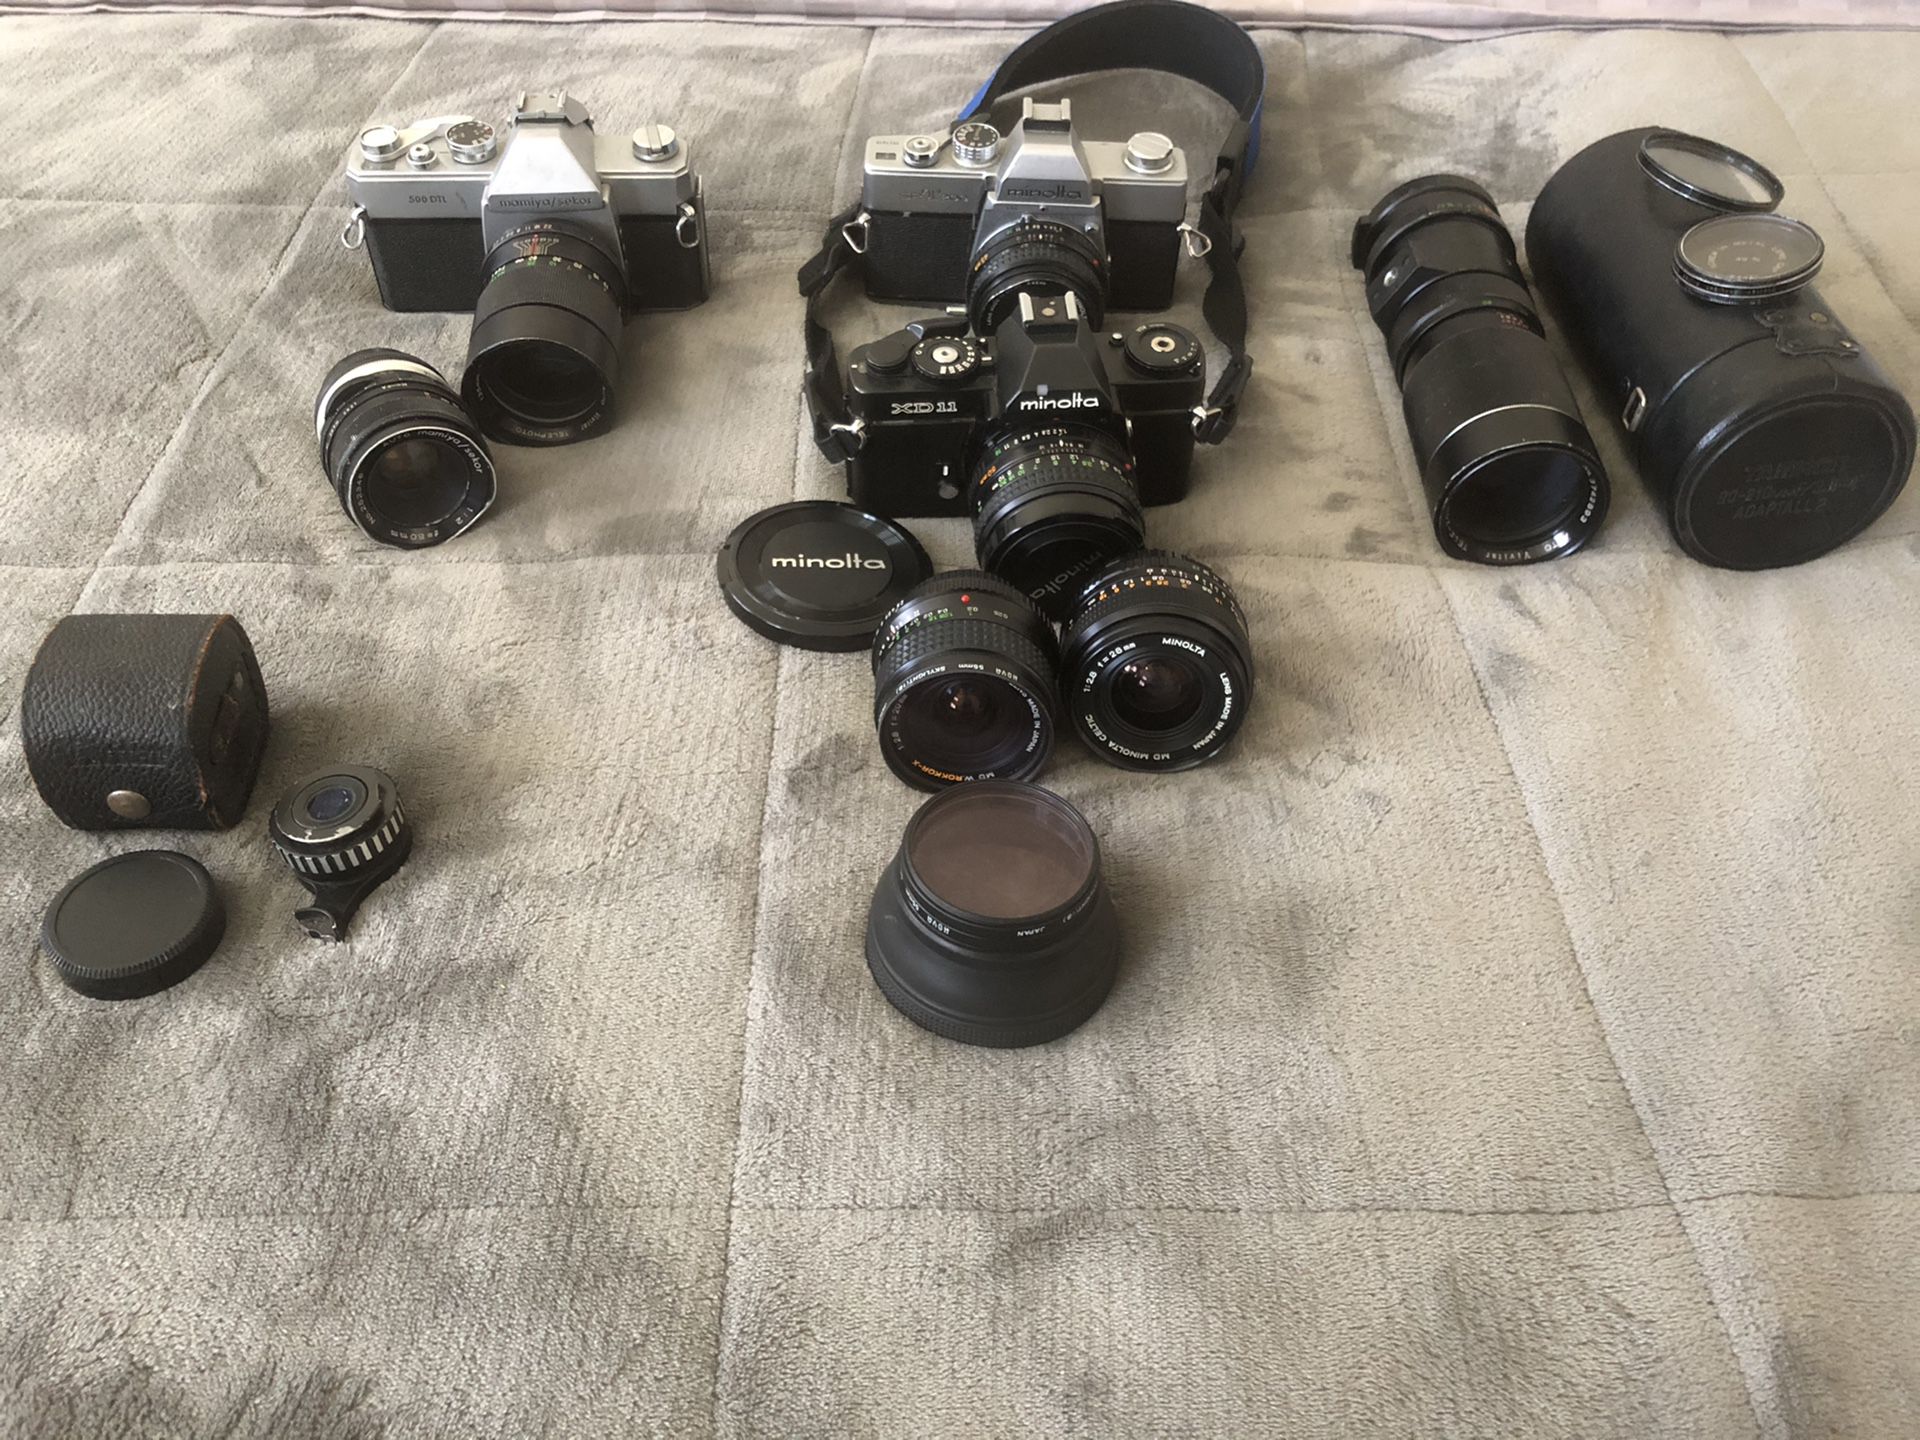 Mamiya, Minolta, Vivitar, Tamron - Vintage cameras and lenses